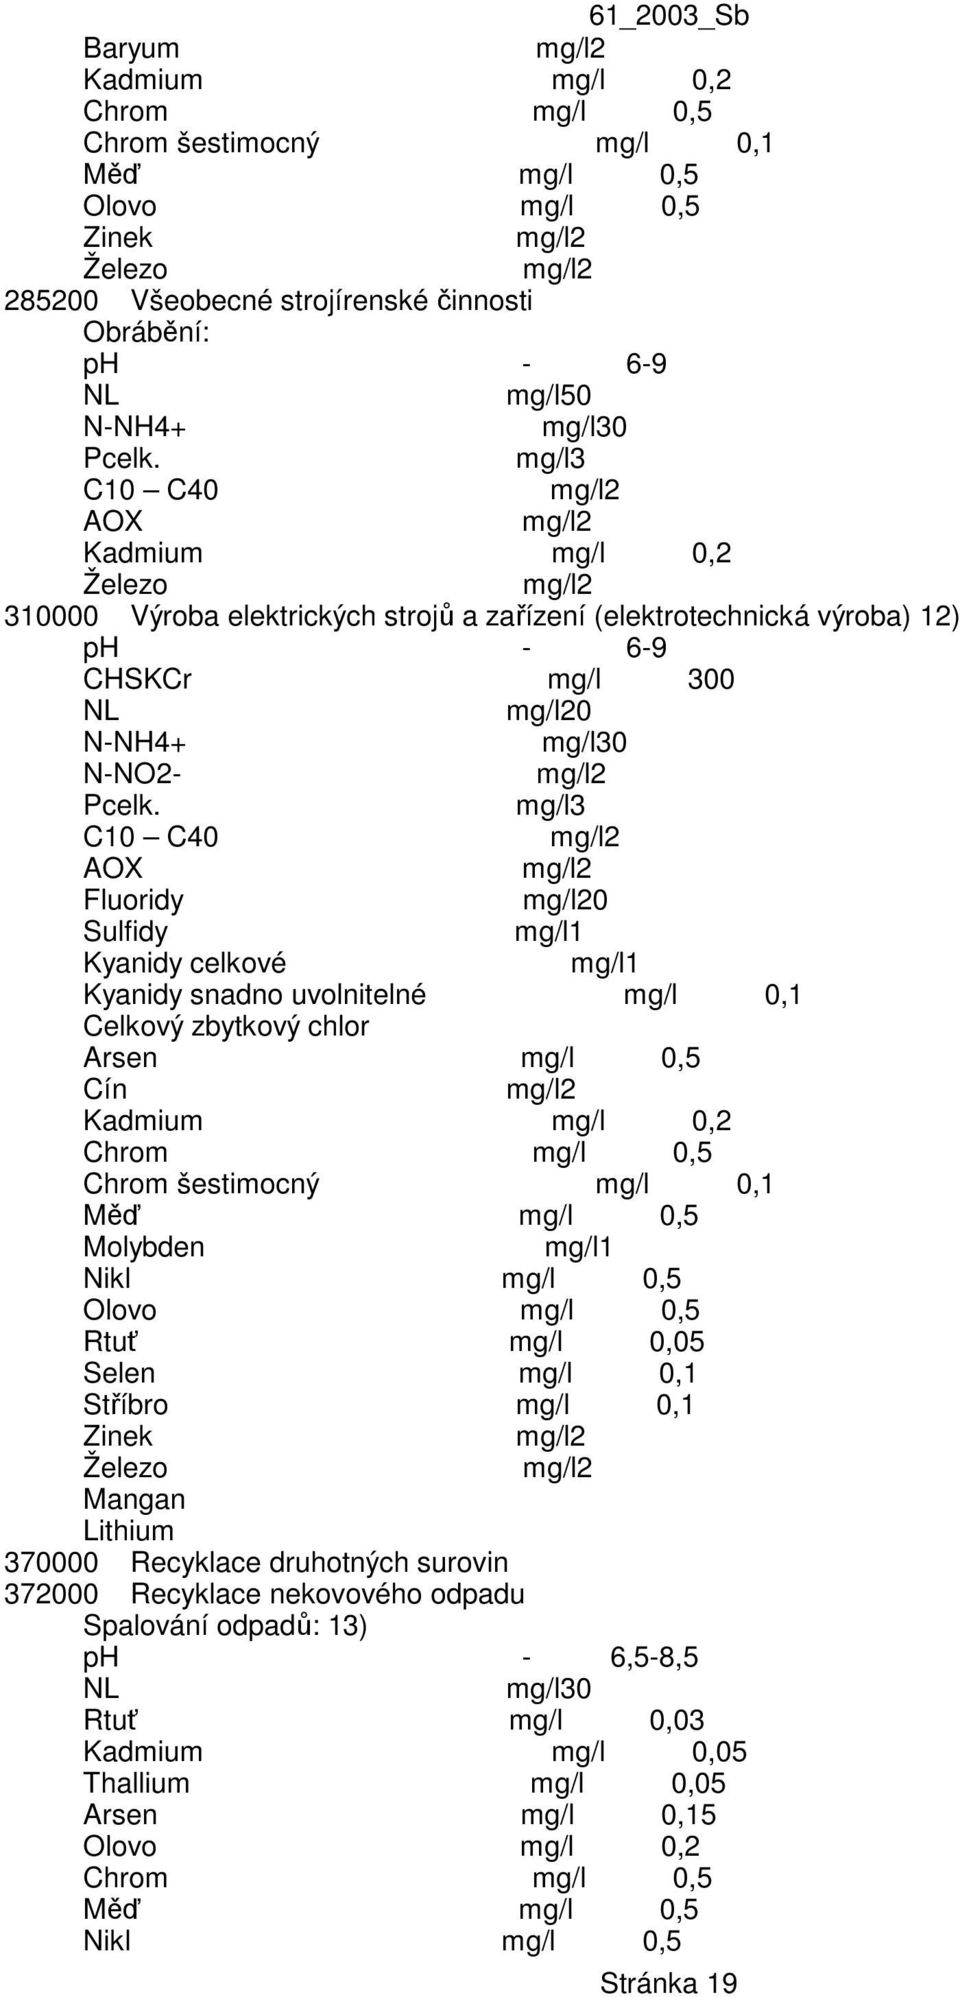 mg/l3 C10 C40 AOX Fluoridy 0 Sulfidy mg/l1 Kyanidy celkové mg/l1 Kyanidy snadno uvolnitelné mg/l 0,1 Celkový zbytkový chlor Arsen mg/l 0,5 Cín Kadmium mg/l 0,2 Chrom mg/l 0,5 Chrom šestimocný mg/l